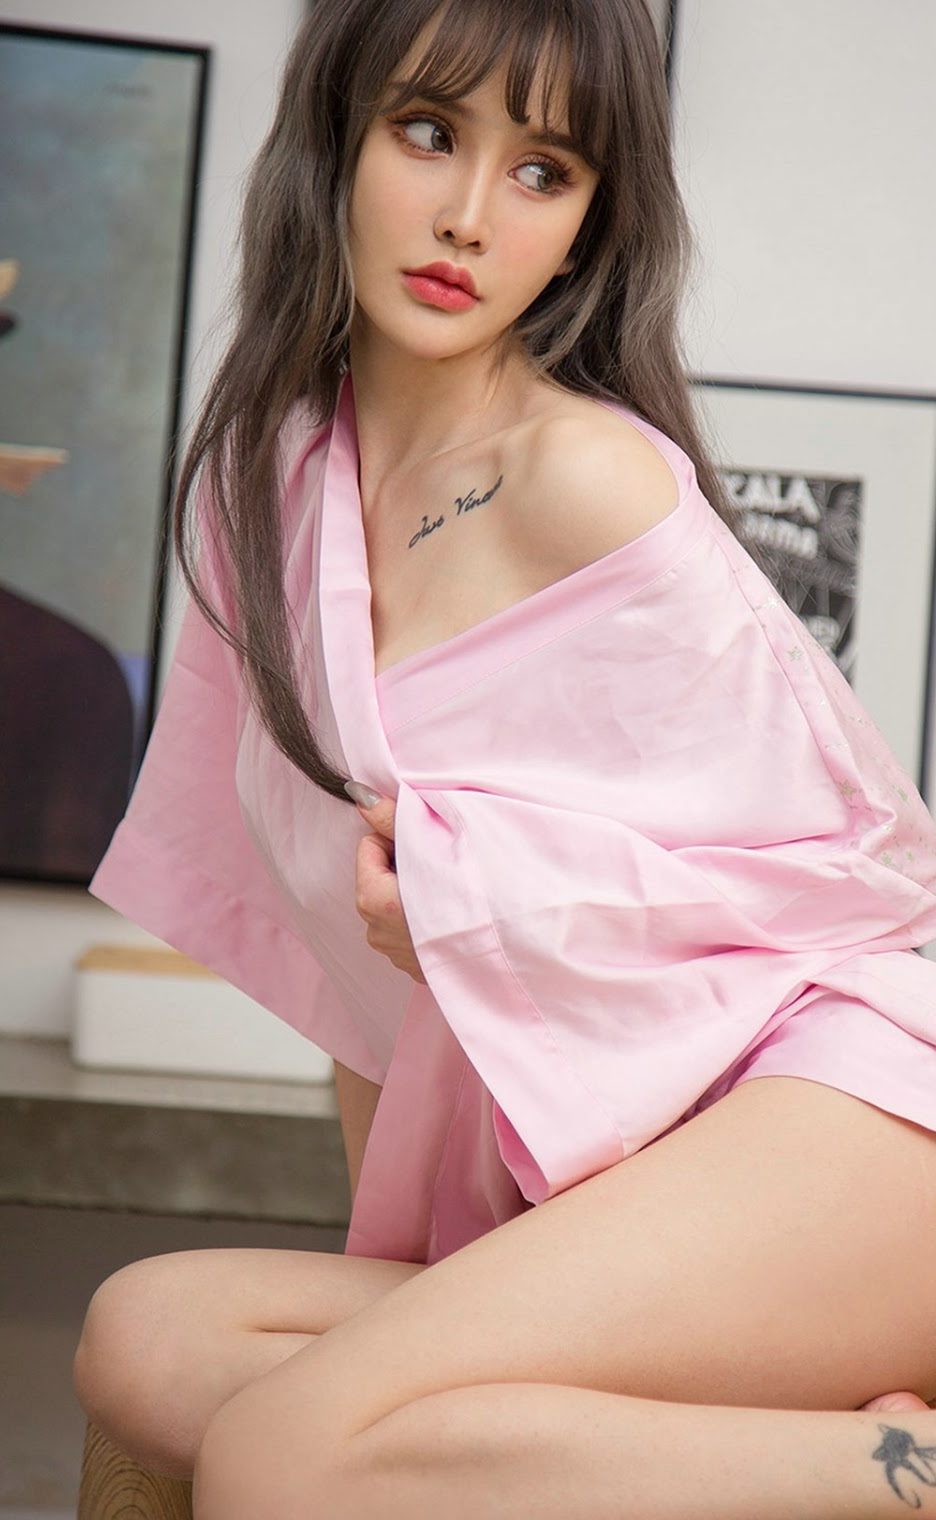 cheryl hot asian girl that looks like barbie in pink underwear